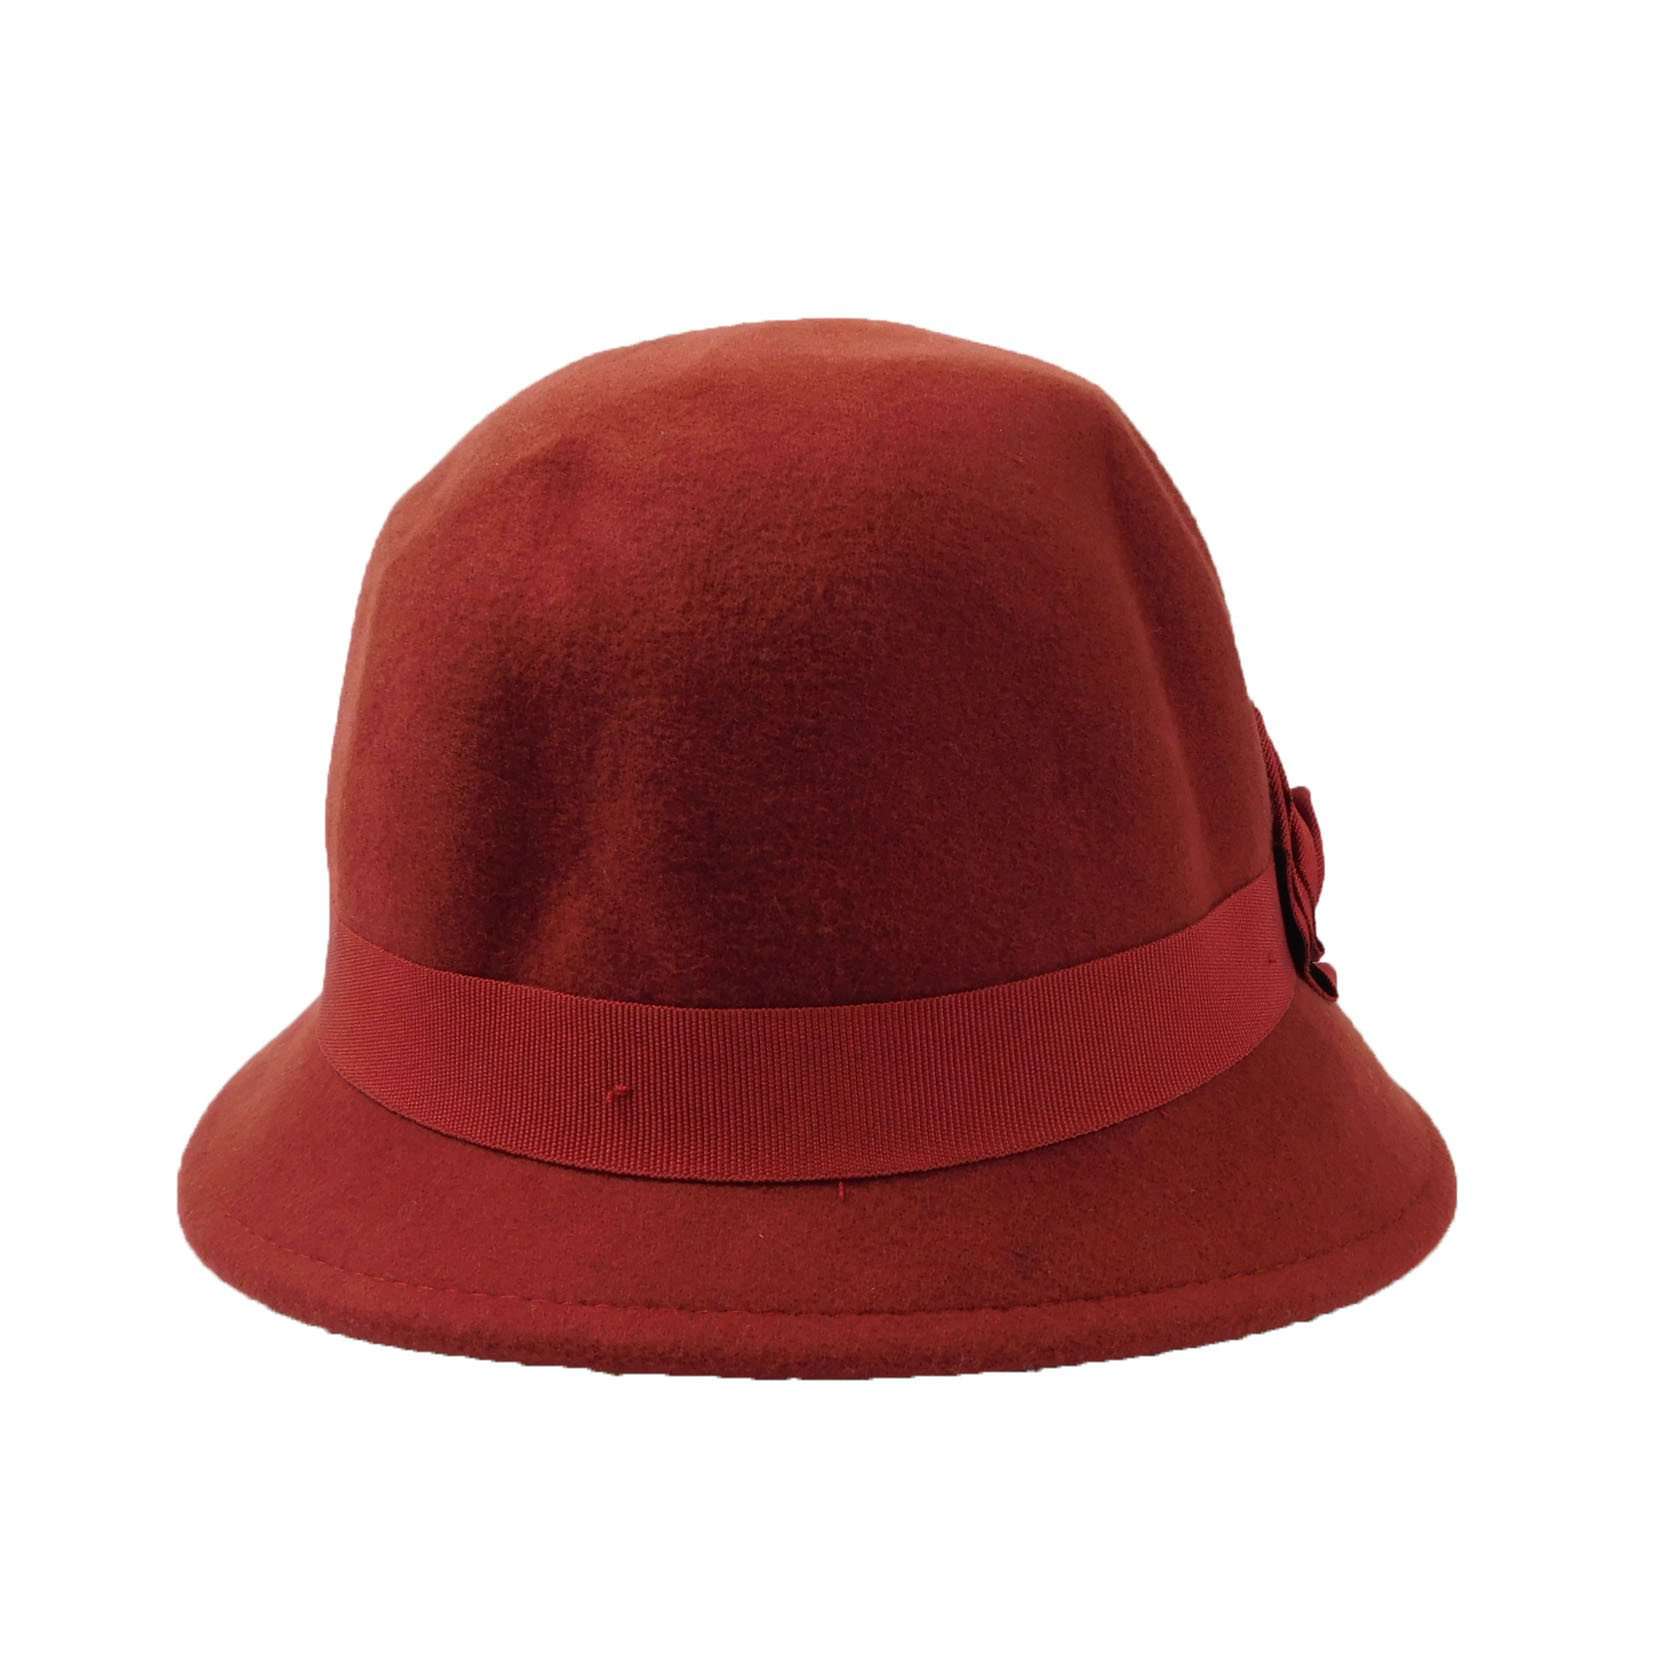 Unique Wrinkled Wool Felt Cloche, Cloche - SetarTrading Hats 